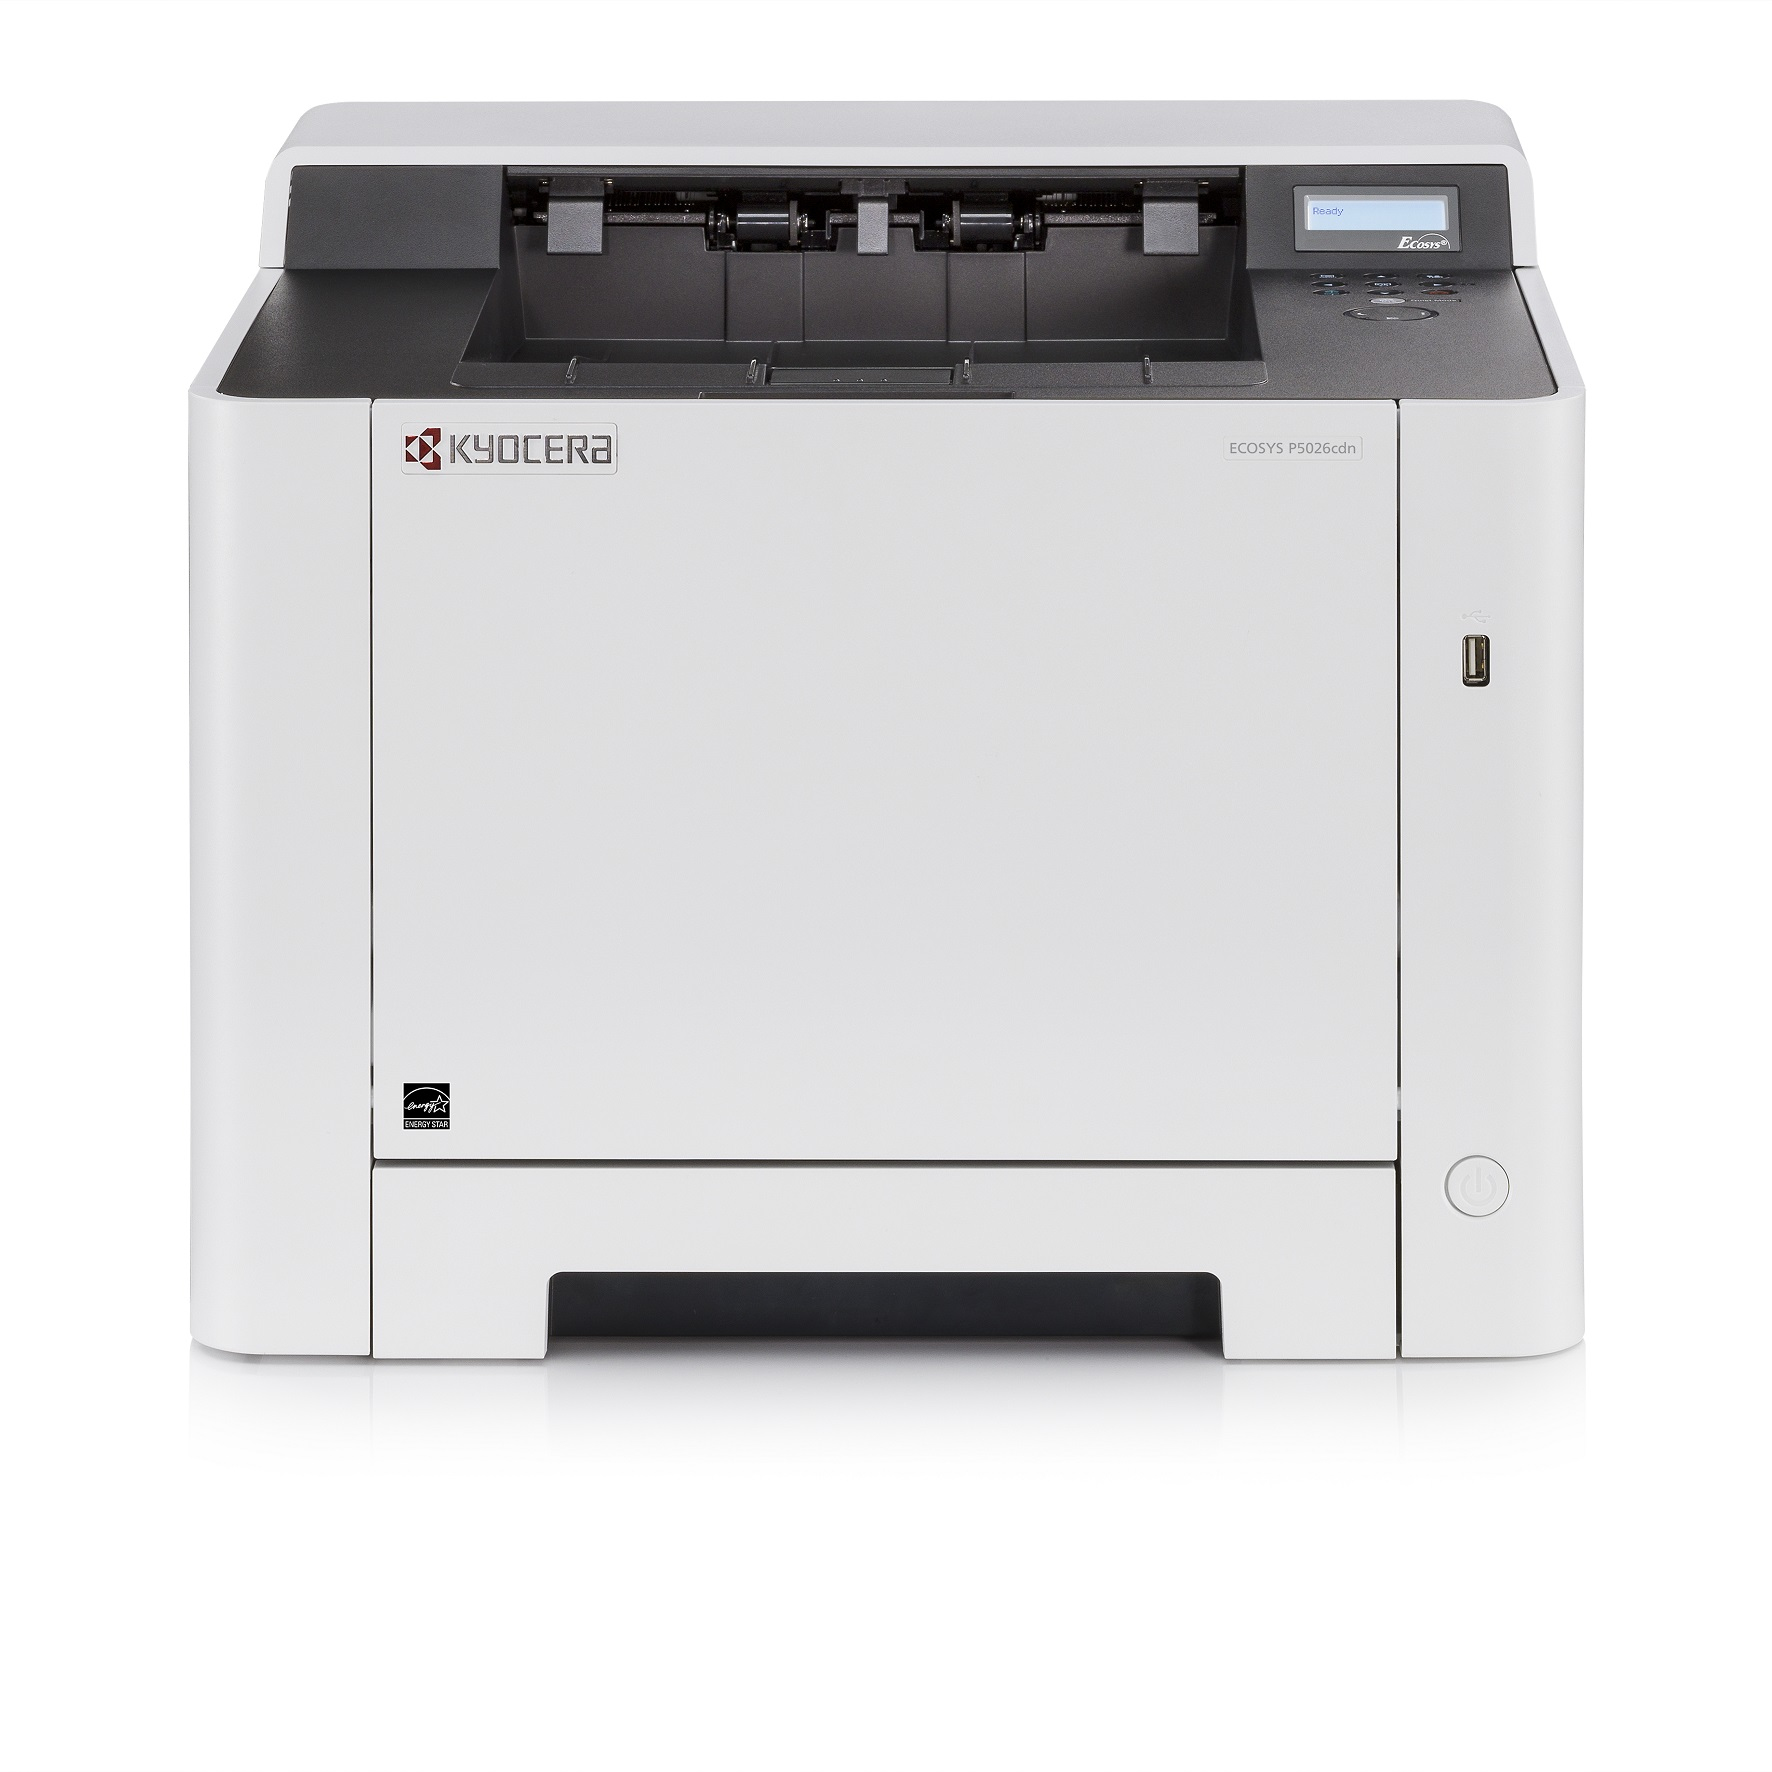 KYOCERA 870B61102RC3NL2 laser printer